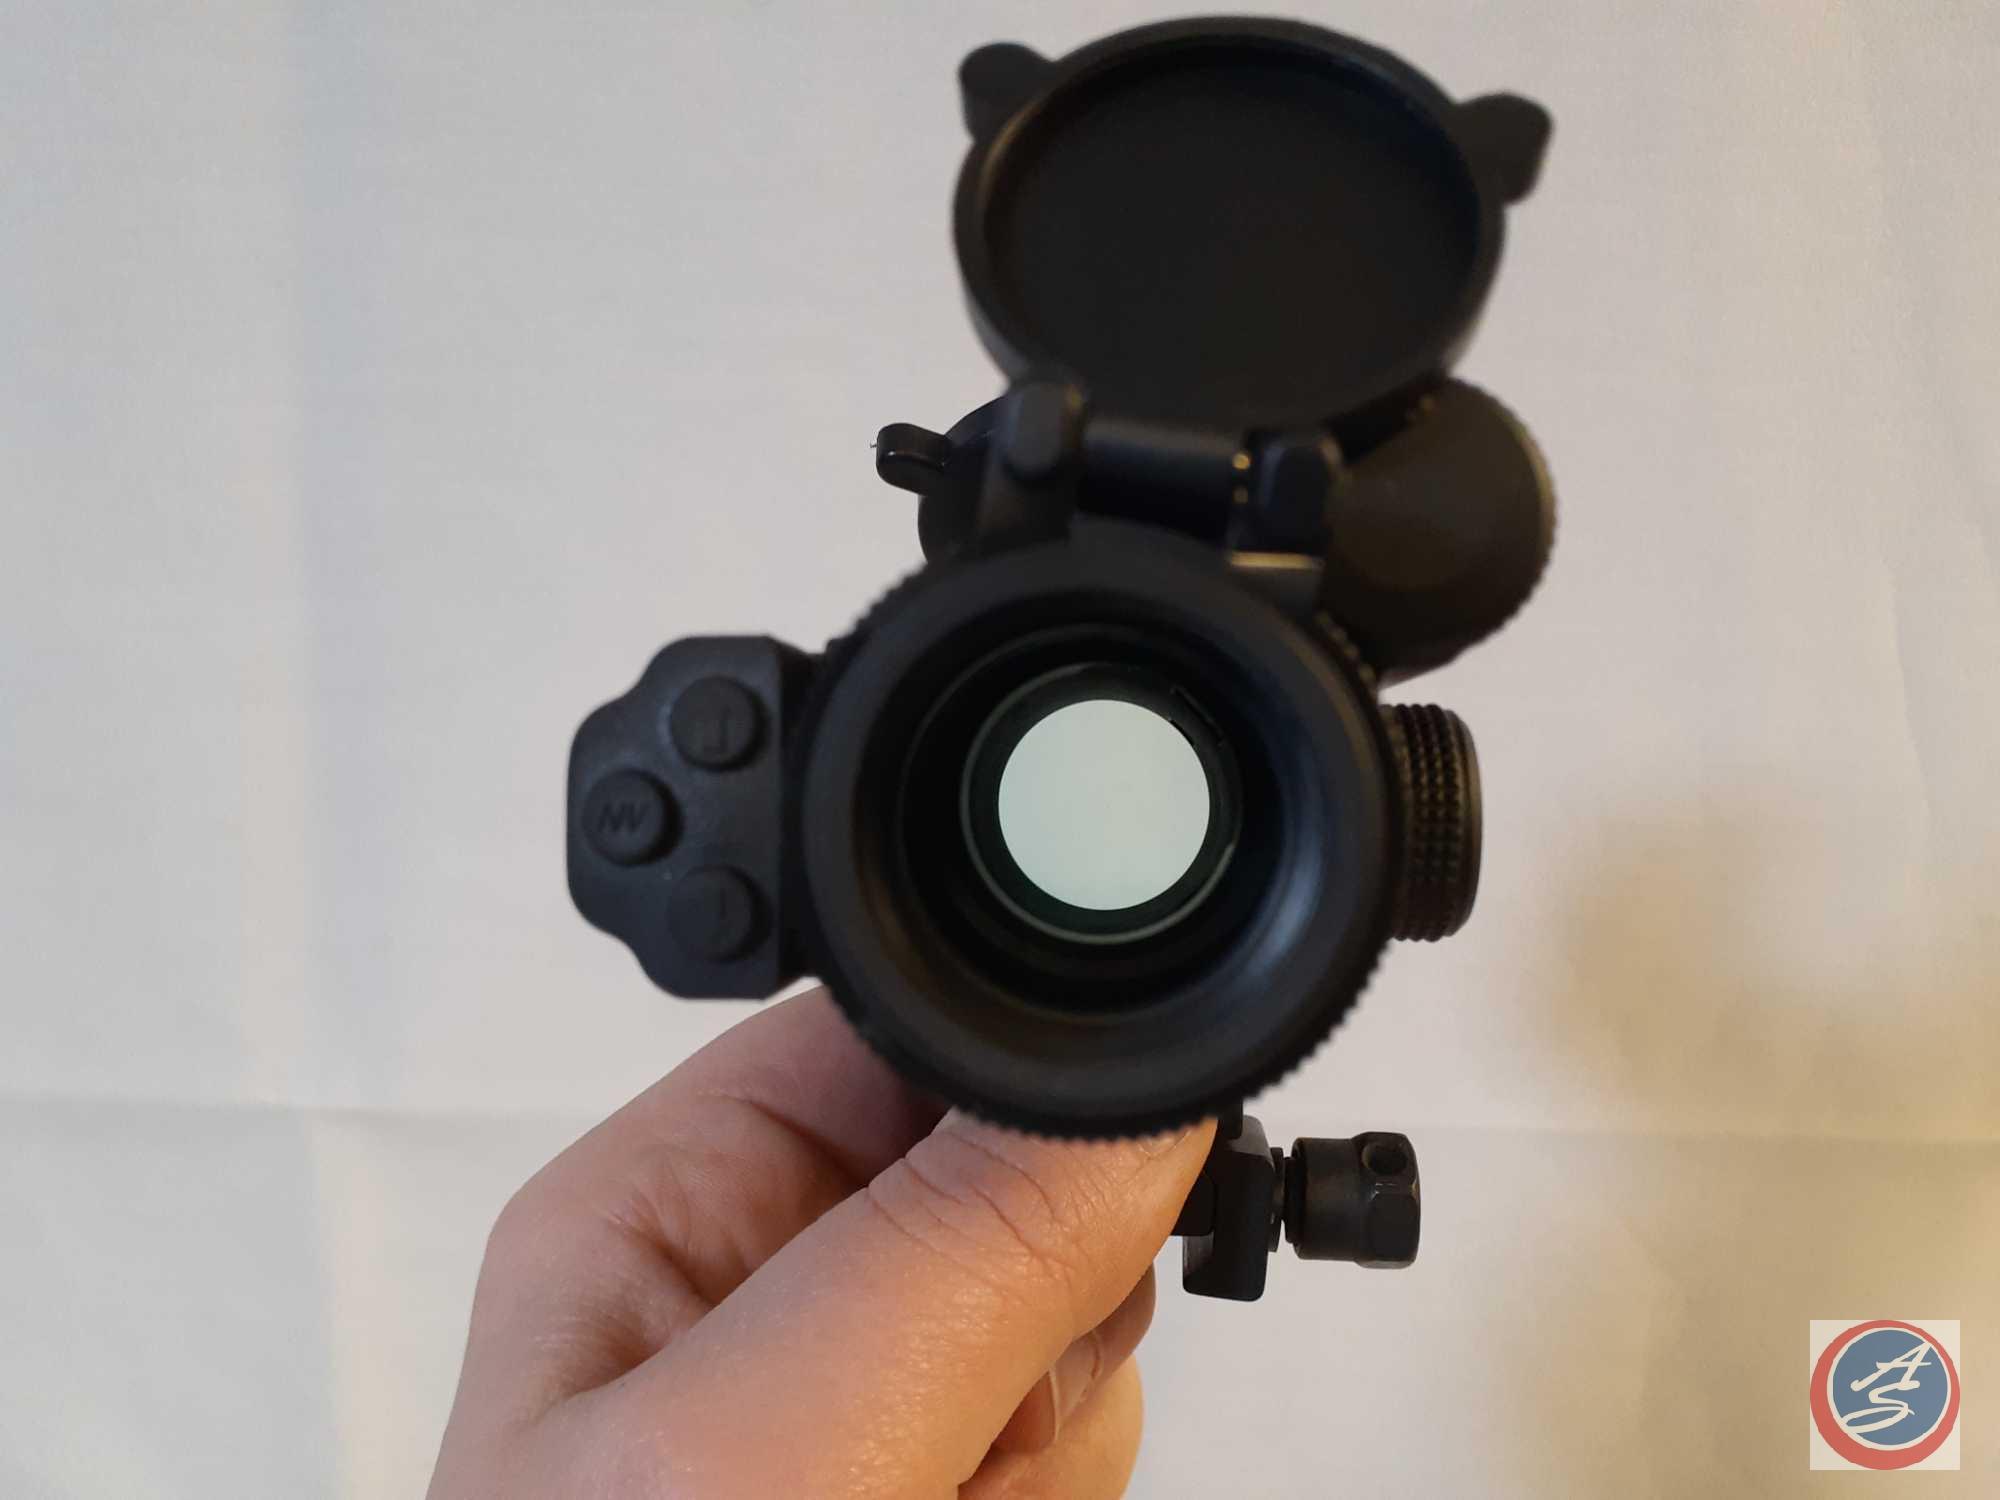 Vortex Strikefire SF-BR-AR15 Red Dot System, Magnifier Lens, Mount, Box